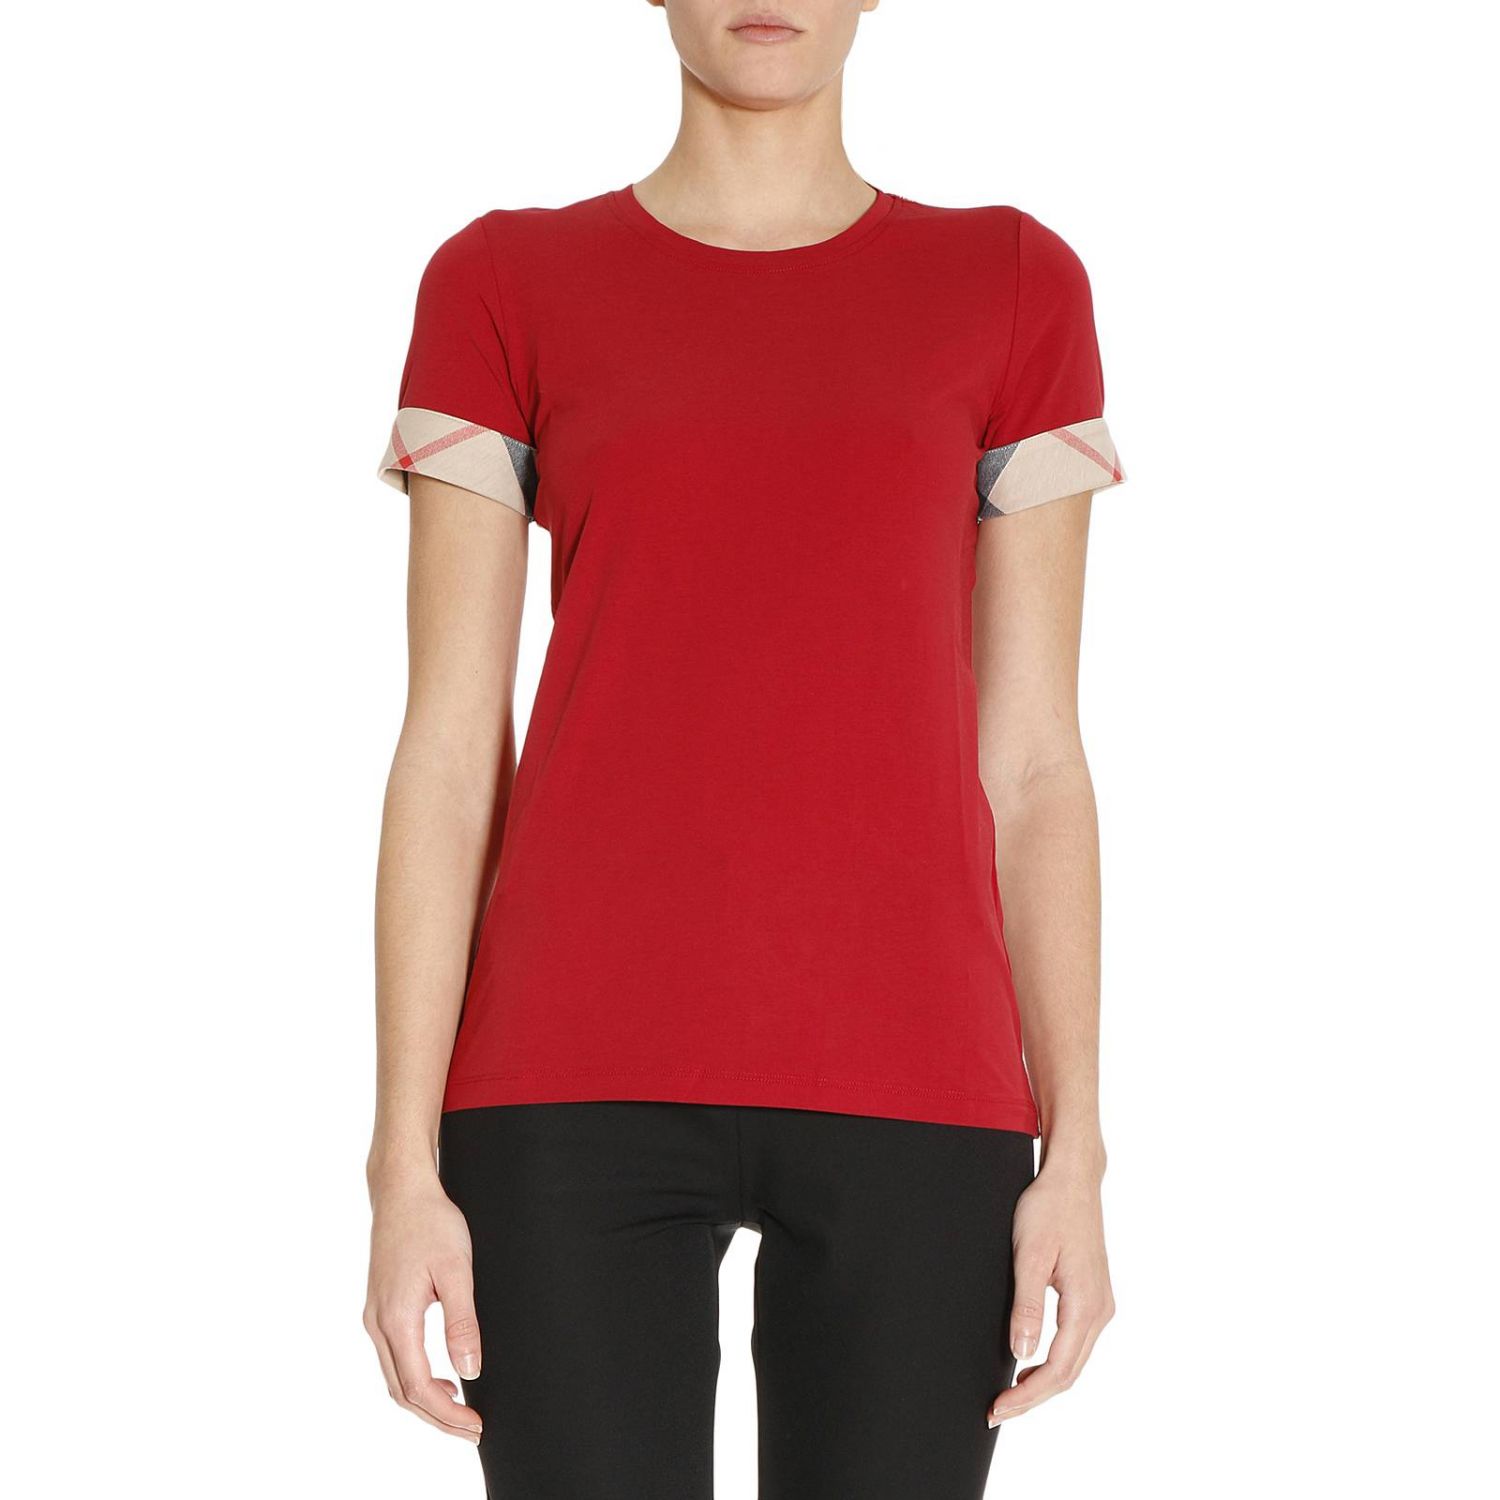 burberry shirt womens red